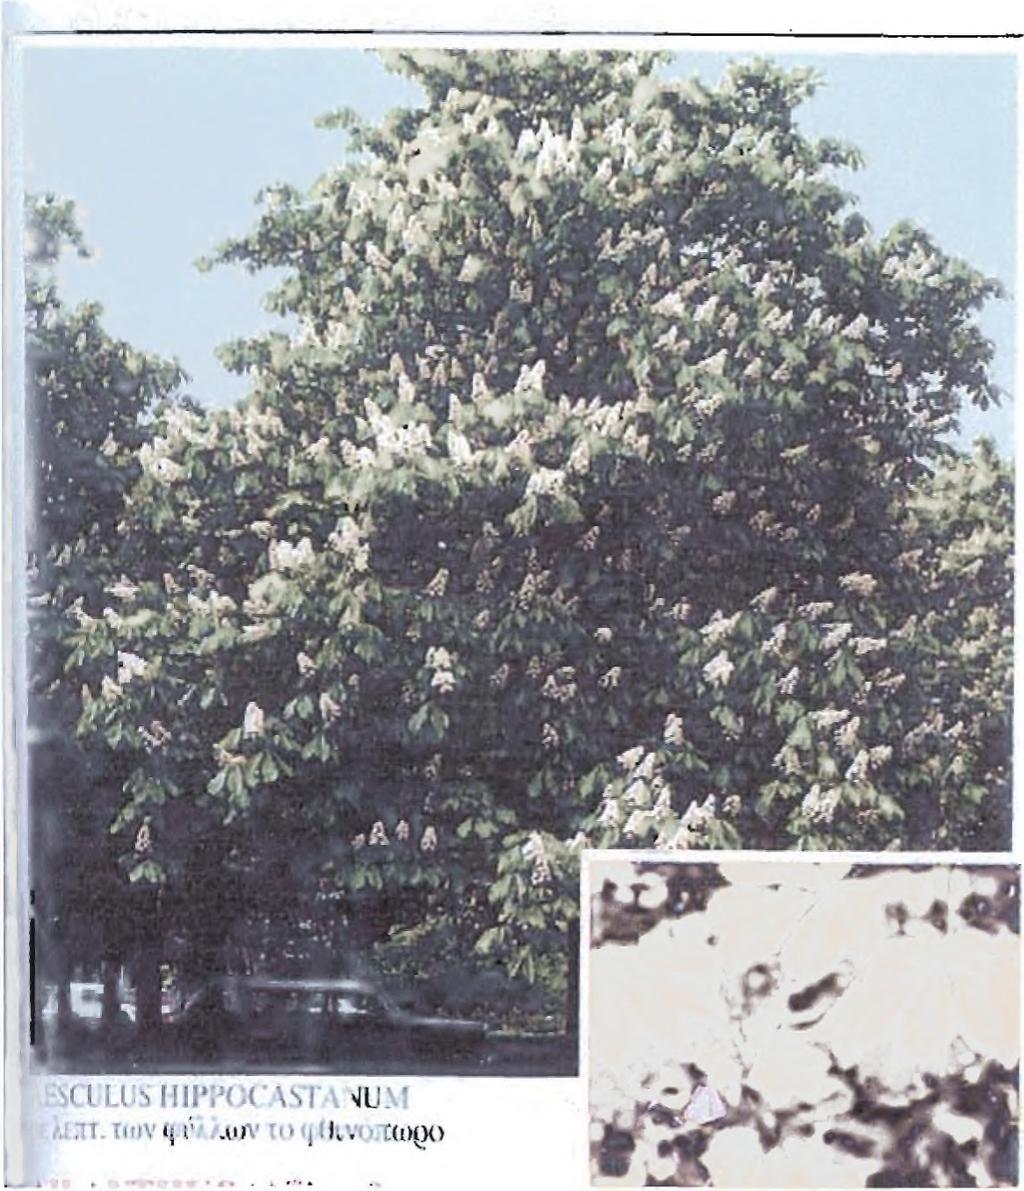 10. Iπποκασταν ιά(.4<?λ7//μλ Ιιίρρααςΐαηιιηι Ηΐροοαιςίαηαοβαβ) Πεοινοαφή Δένδρο ύψους 25μ.Επιβλητικό με στρογγυλό σχήμα, τεράστιο με παλαμοειδή πράσινα φύλλα που το φθινόπωρο γίνονται κίτρινα.